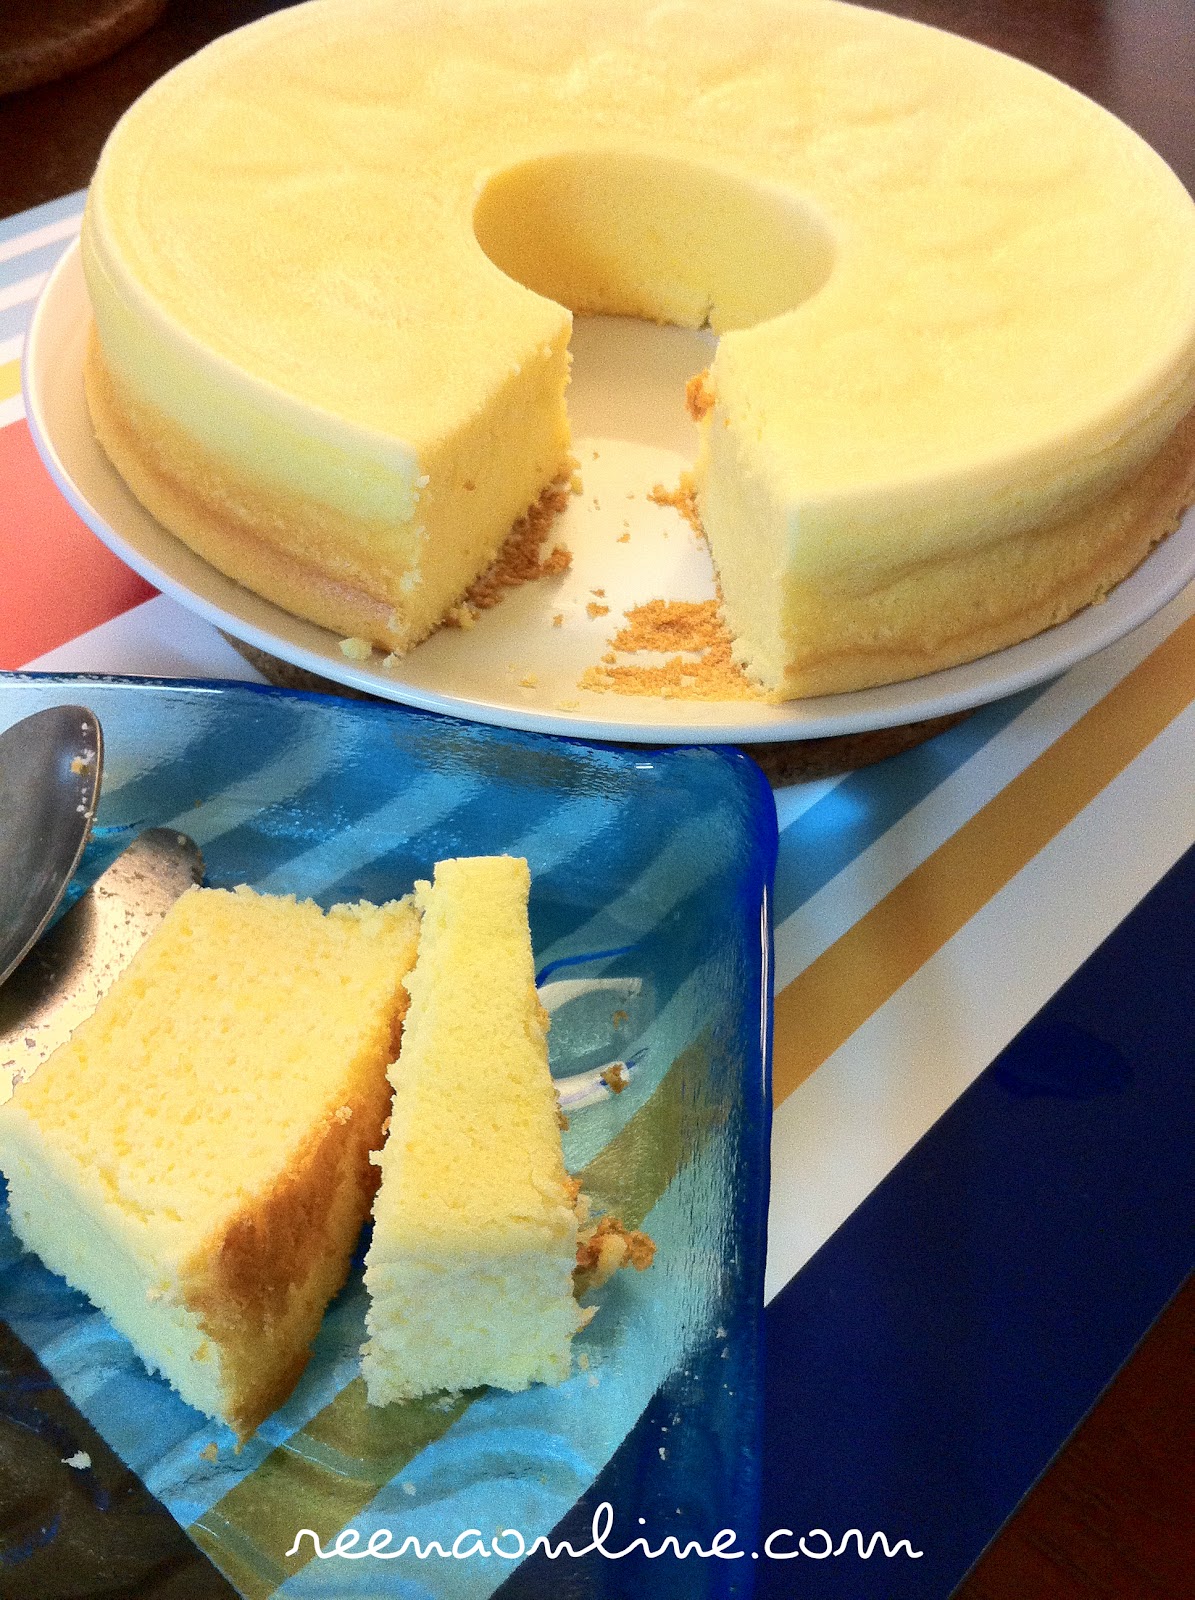 Reena's Online: Resepi : Kek Cotton Cheese / Cotton Cheesecake